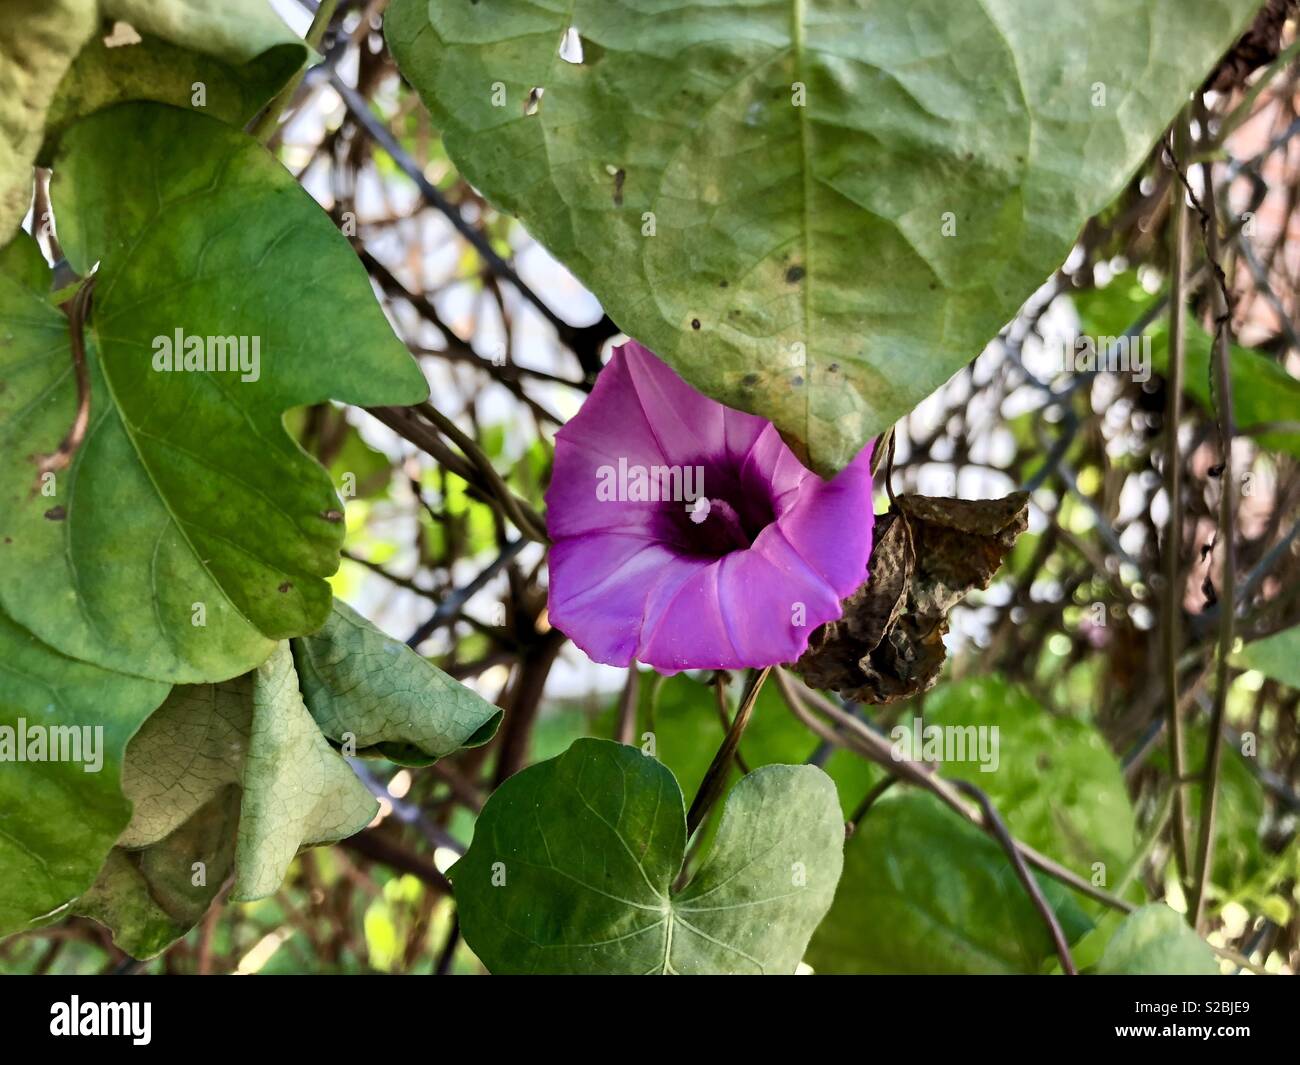 Deep purple bloom peeking out behind season changing leaves Stock Photo